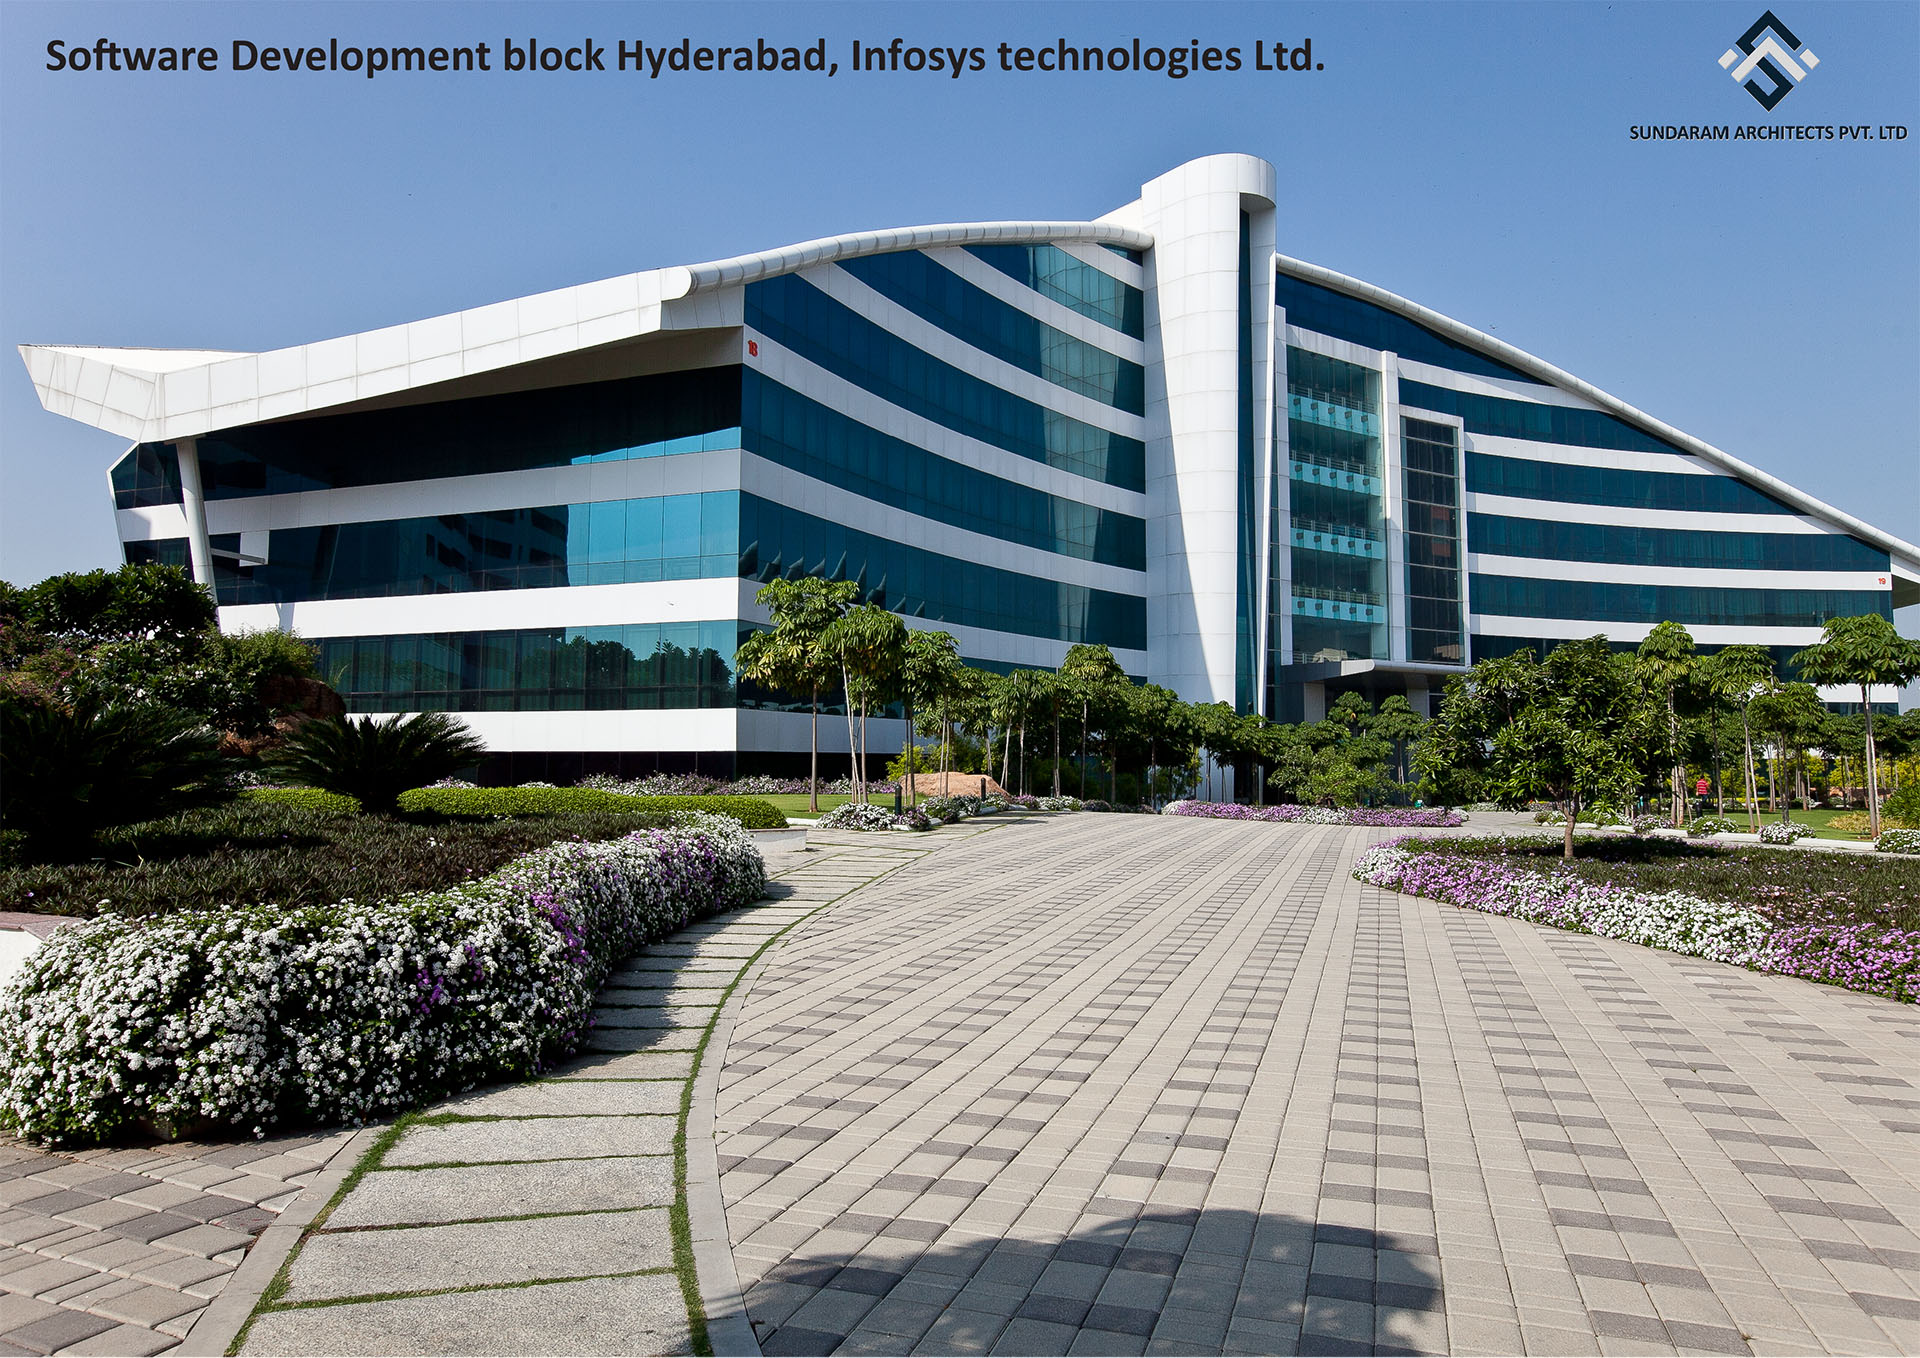 Software Development Block, Hyderabad, Infosys Technologies Ltd - Corporate Offices & IT Design